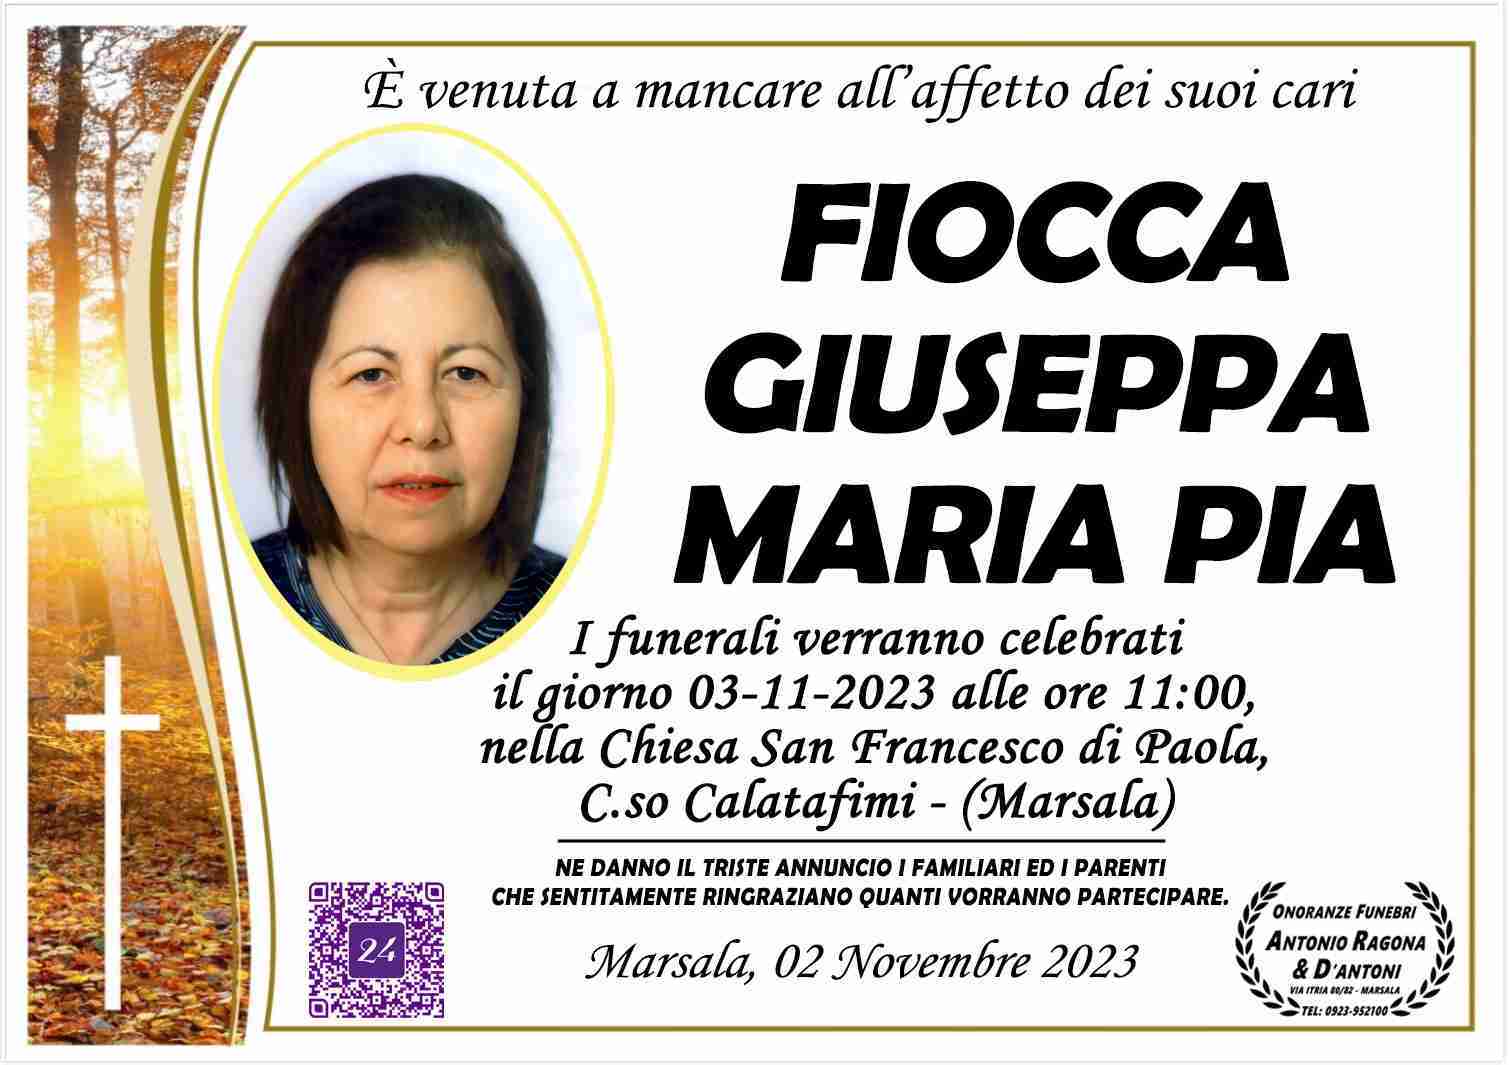 Giuseppa Maria Pia Fiocca